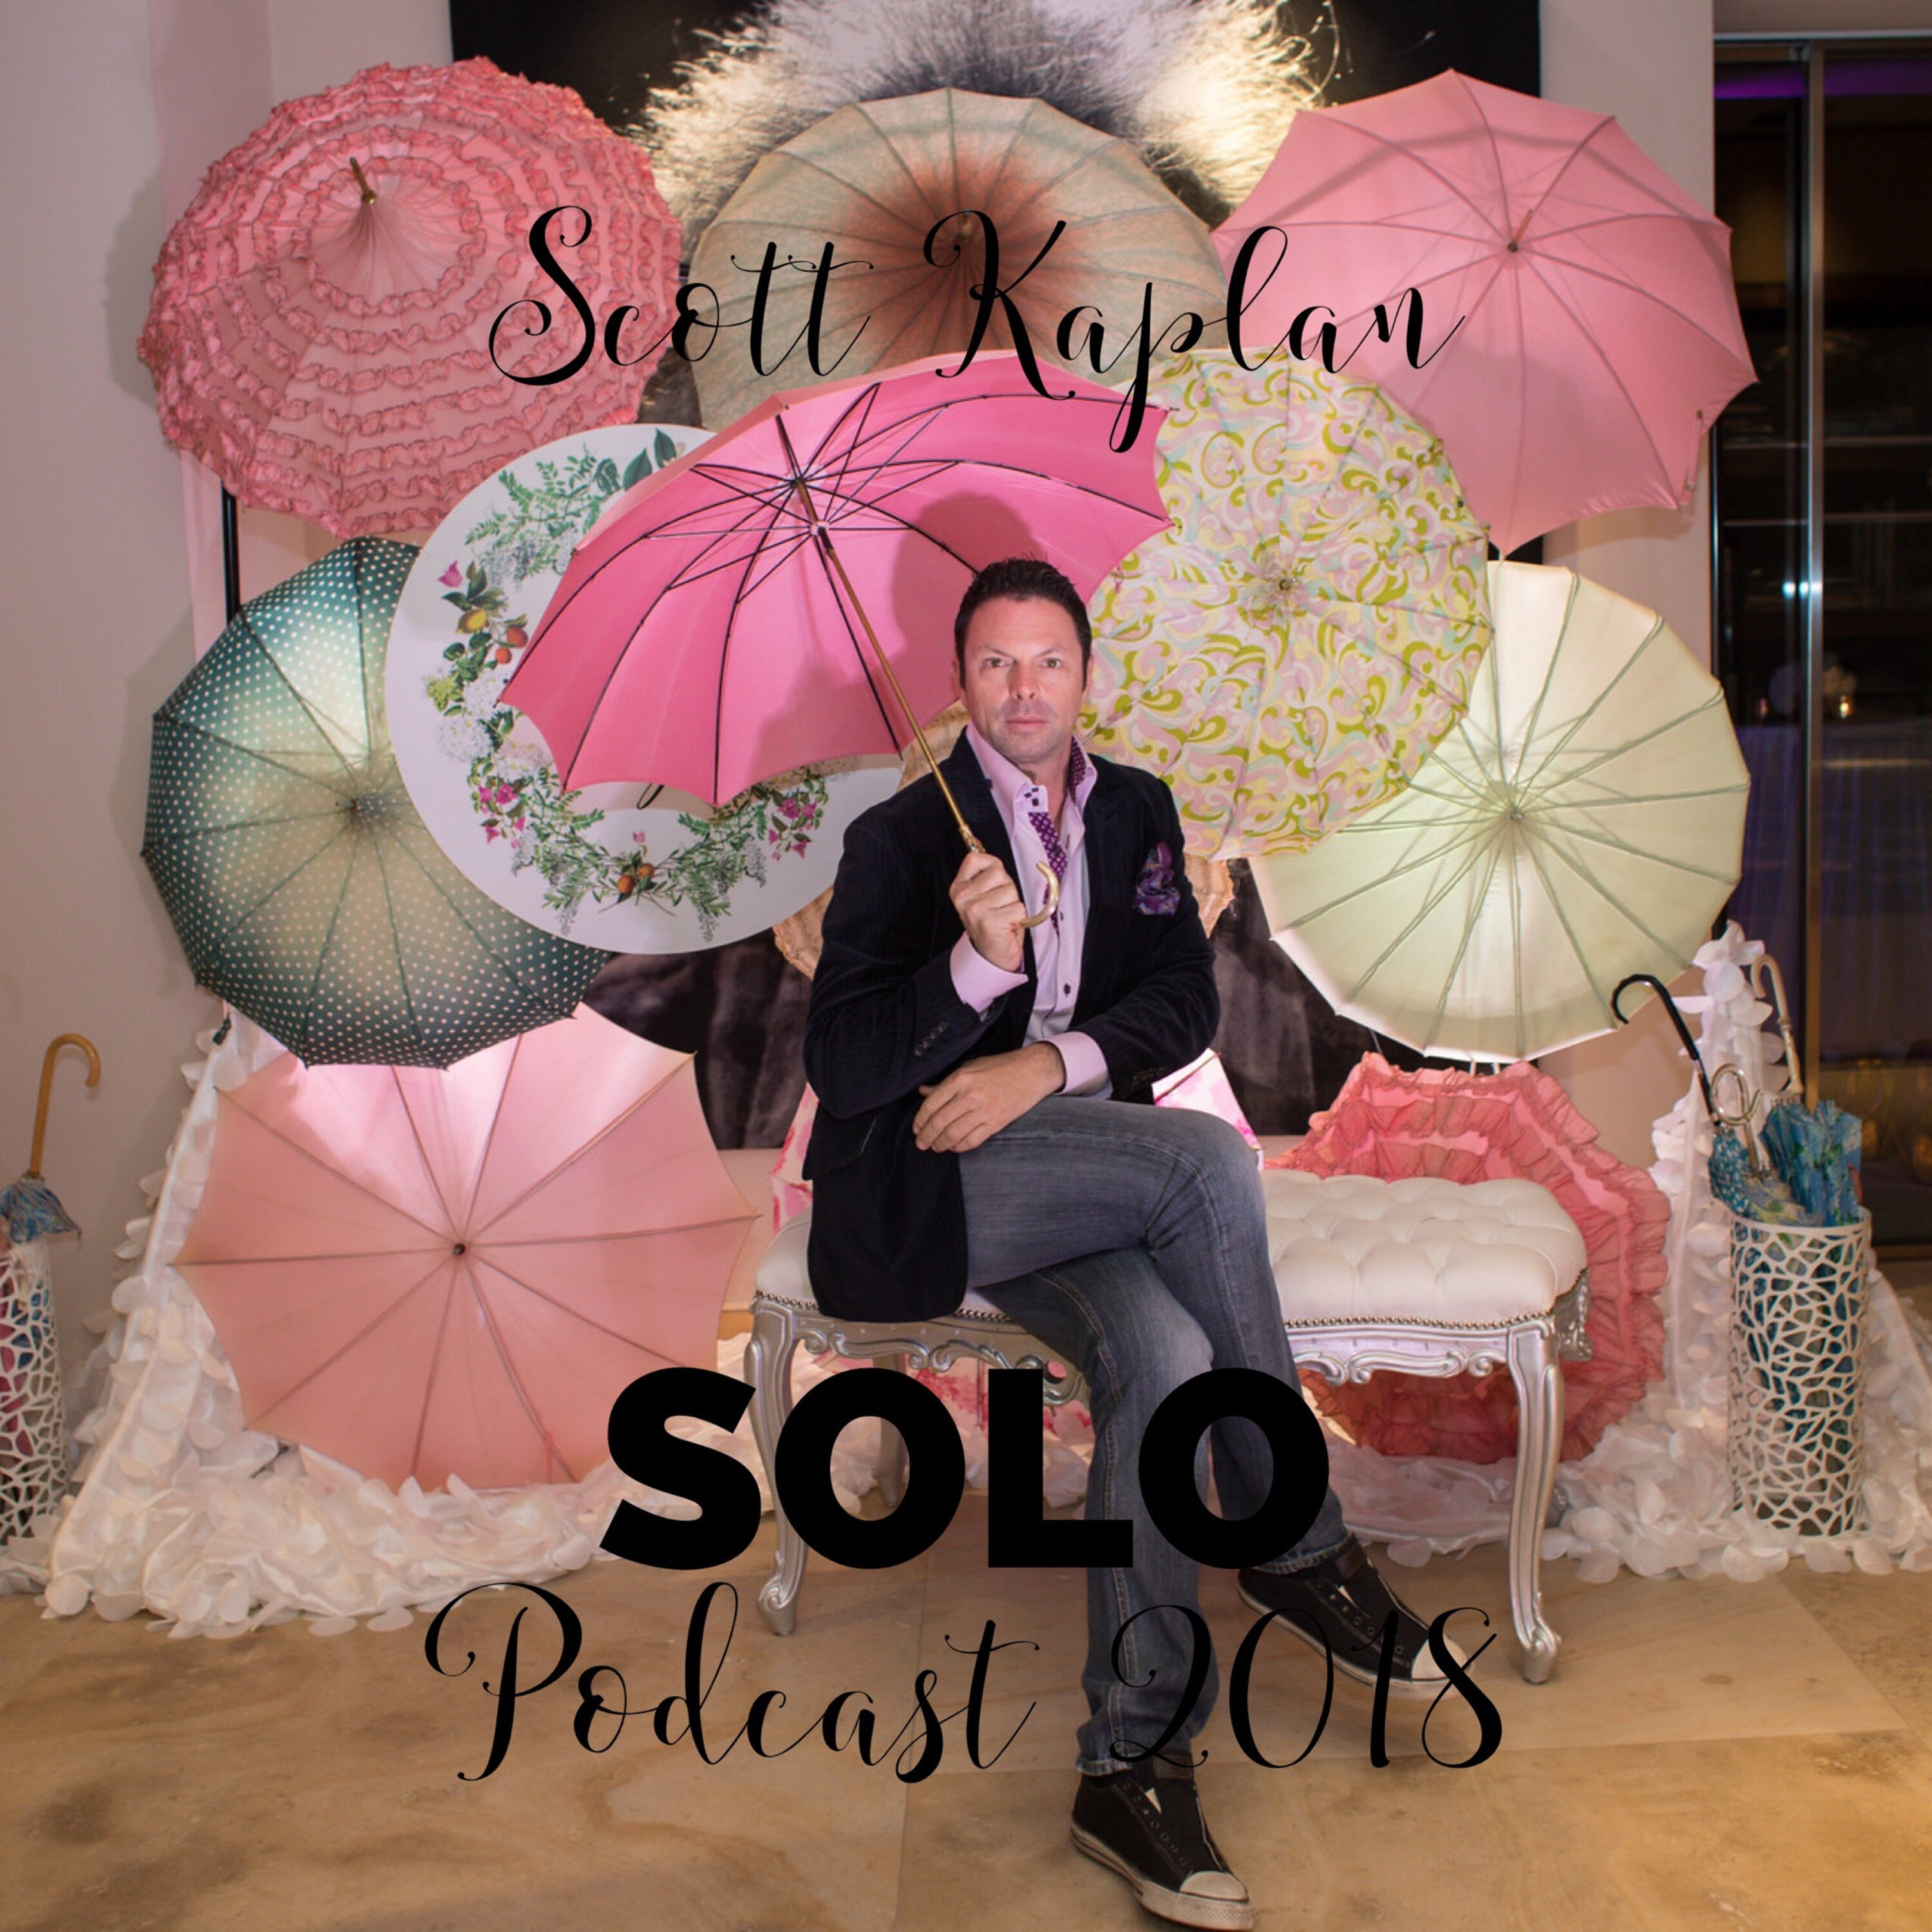 The Scott Kaplan SOLO Podcast